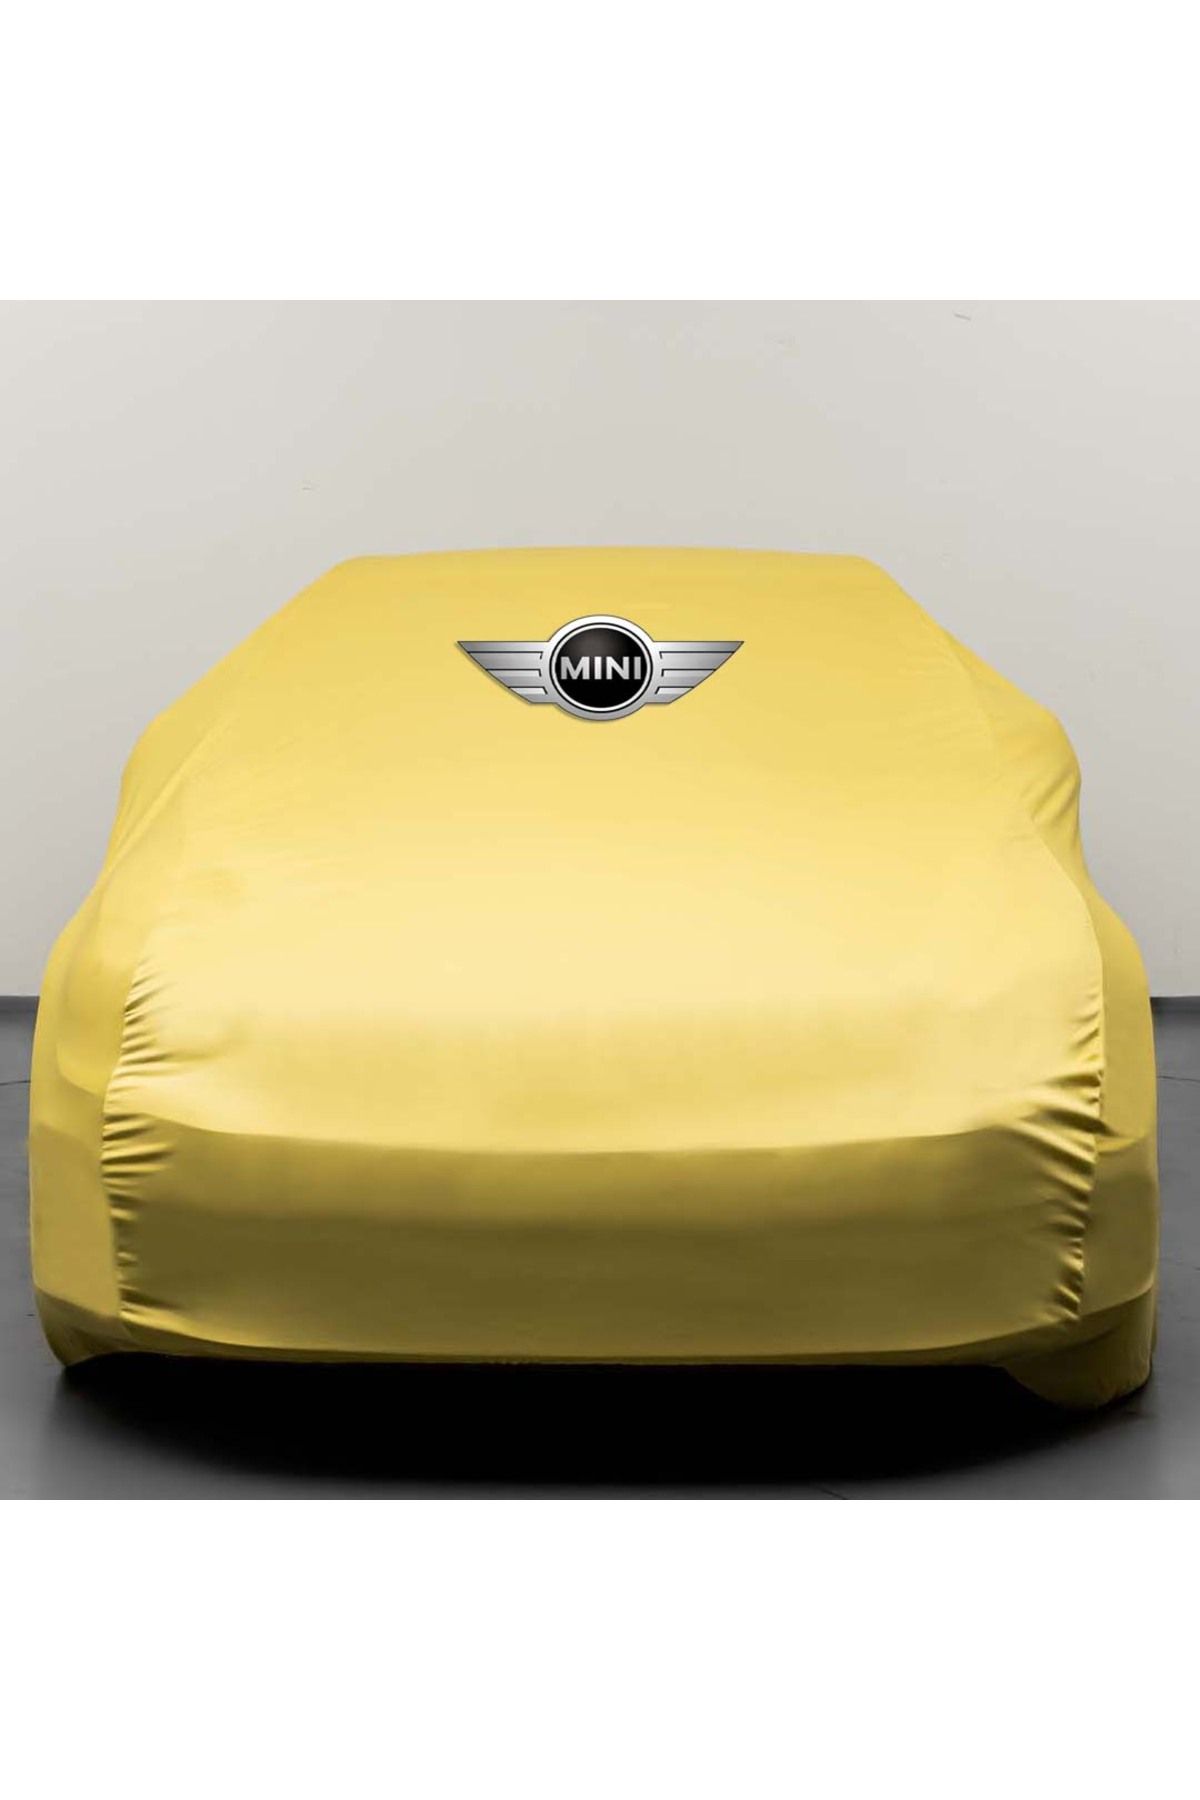 Teksin Mini CLUBMAN Fabric Logo Car Tarpaulin - Combed Cotton Cover YELLOW  - Trendyol